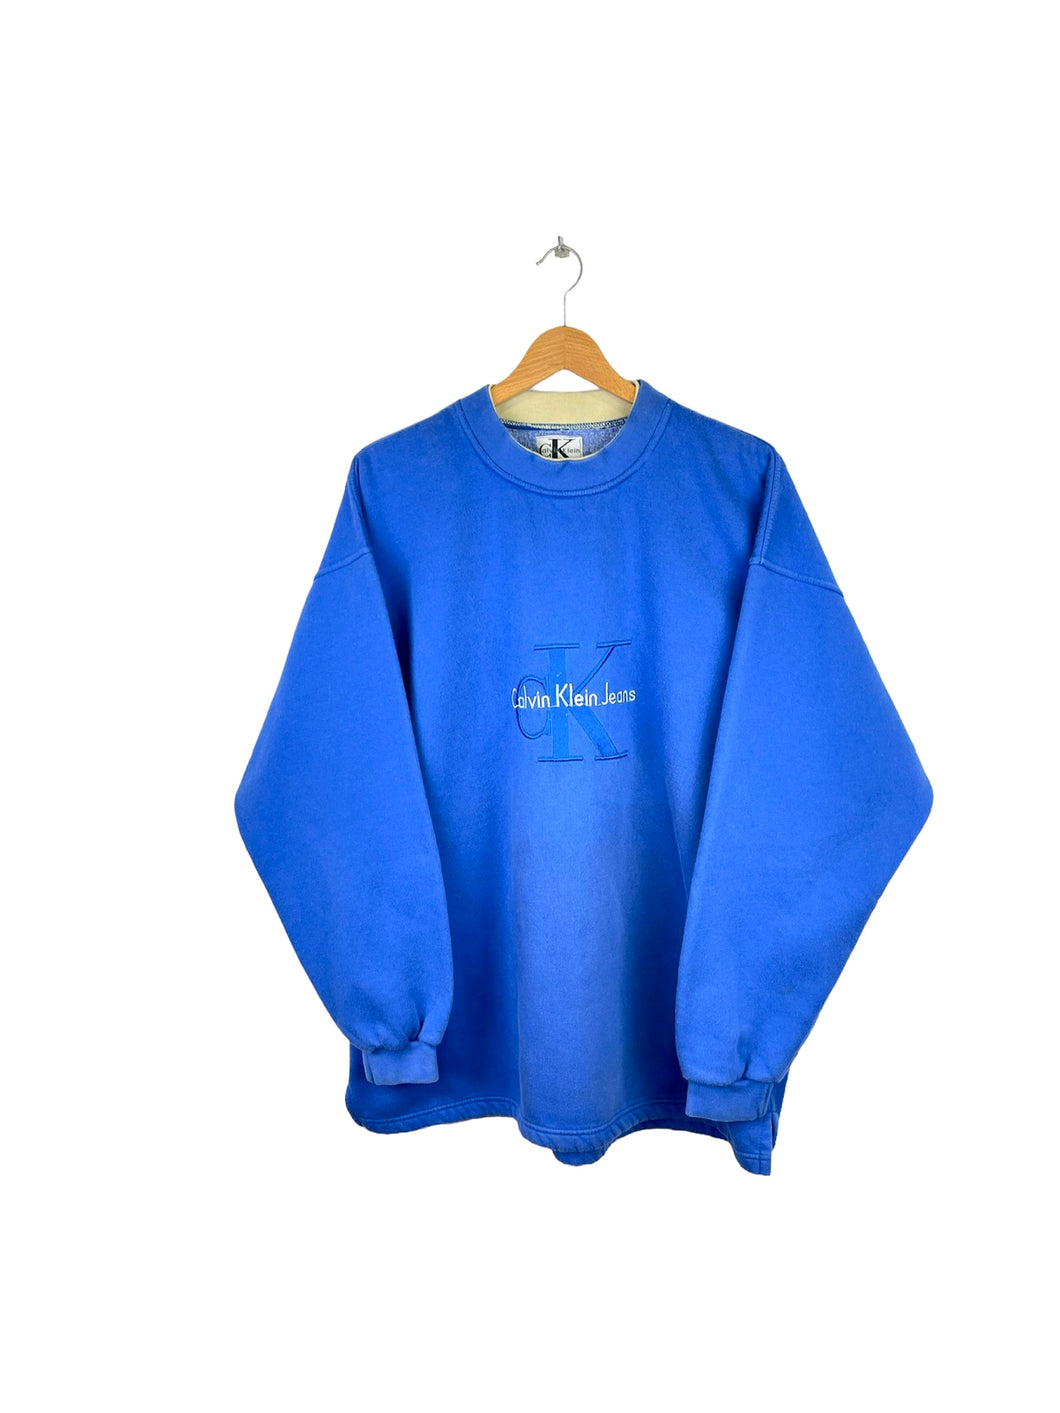 Calvin Klein Bootleg Sweatshirt - XLarge